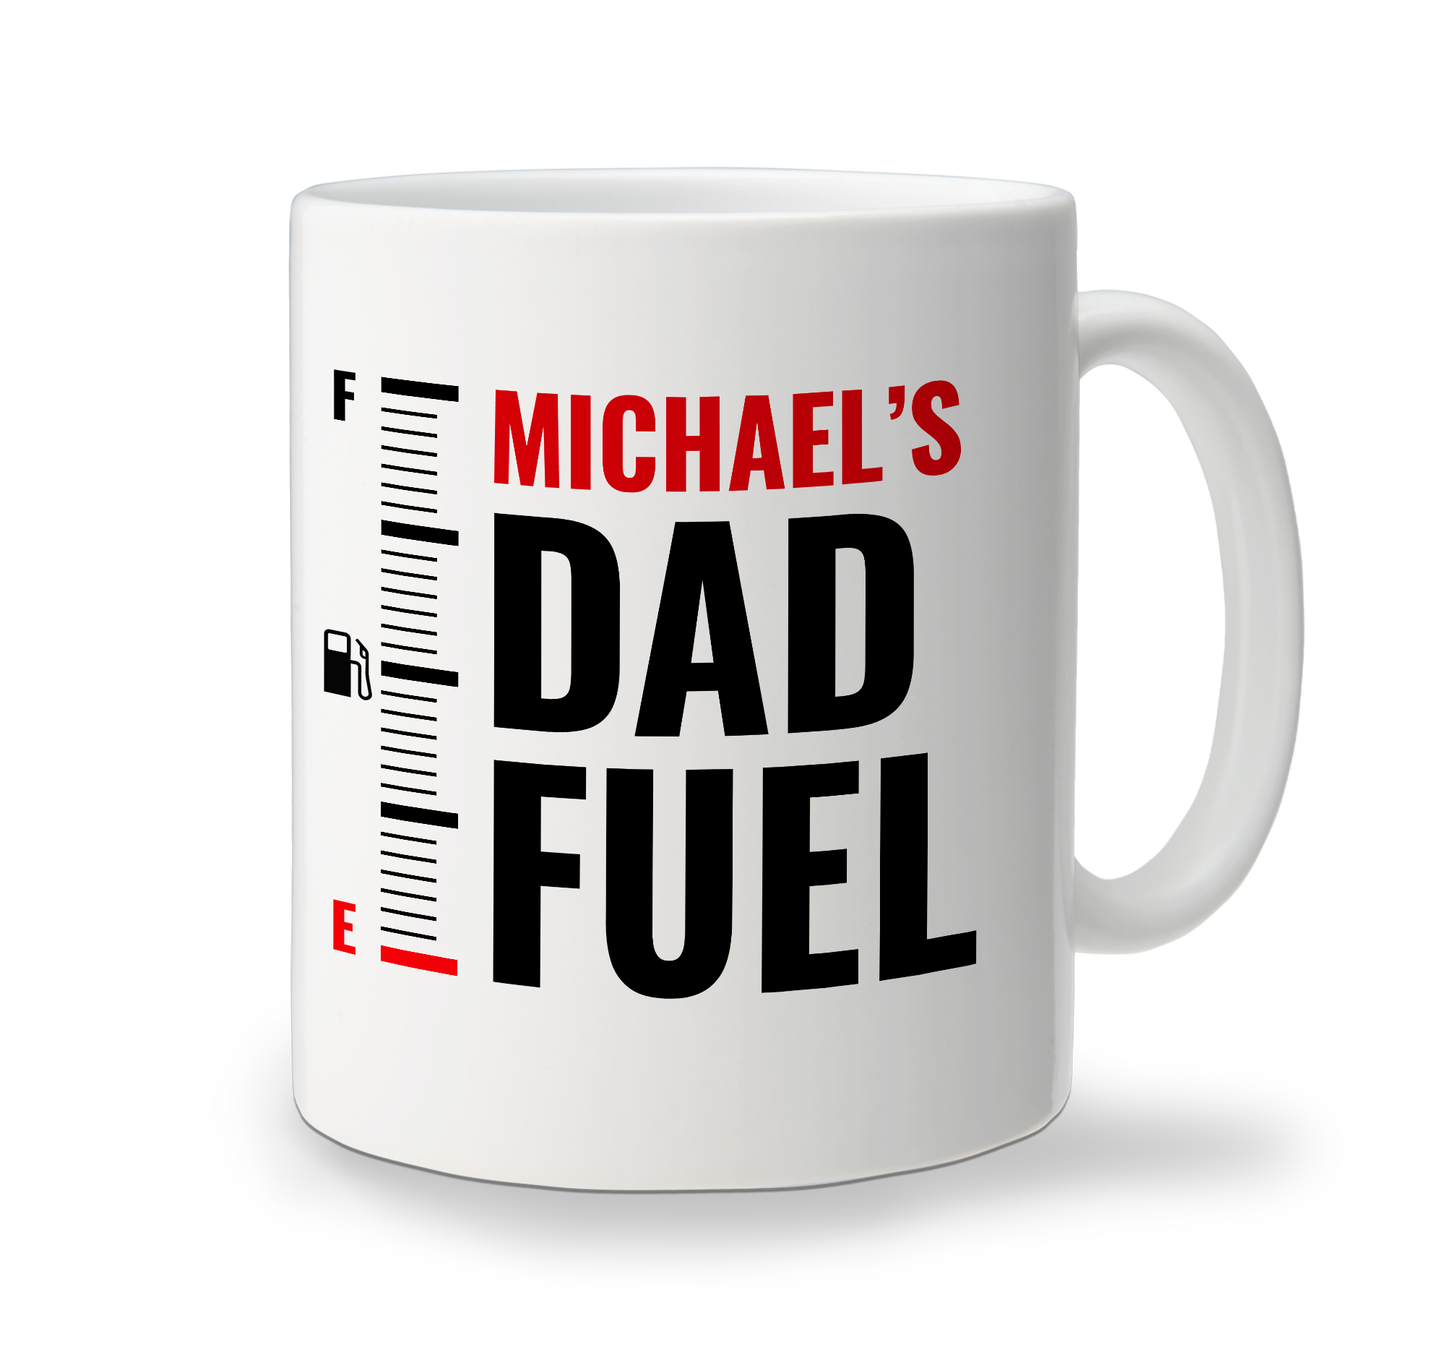 Ceramic Mug - Dad Fuel